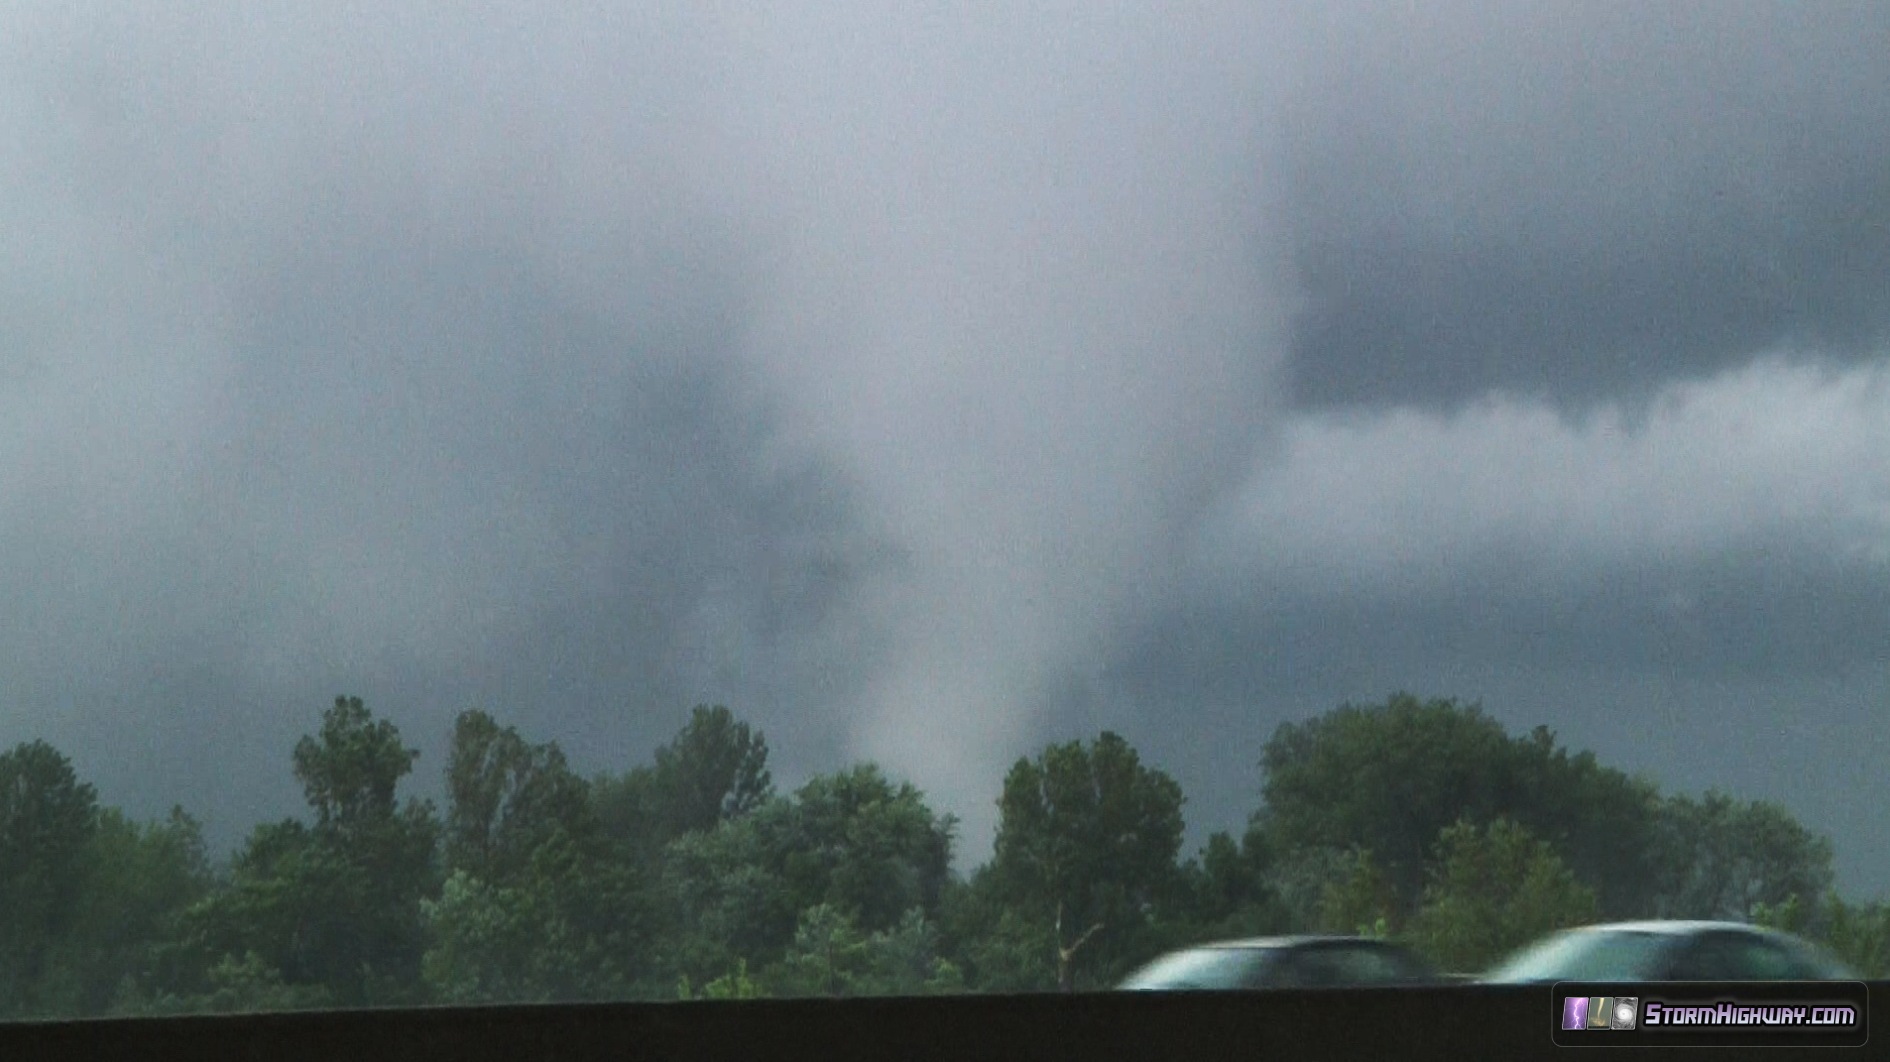 St. Louis tornado - June 7, 2014